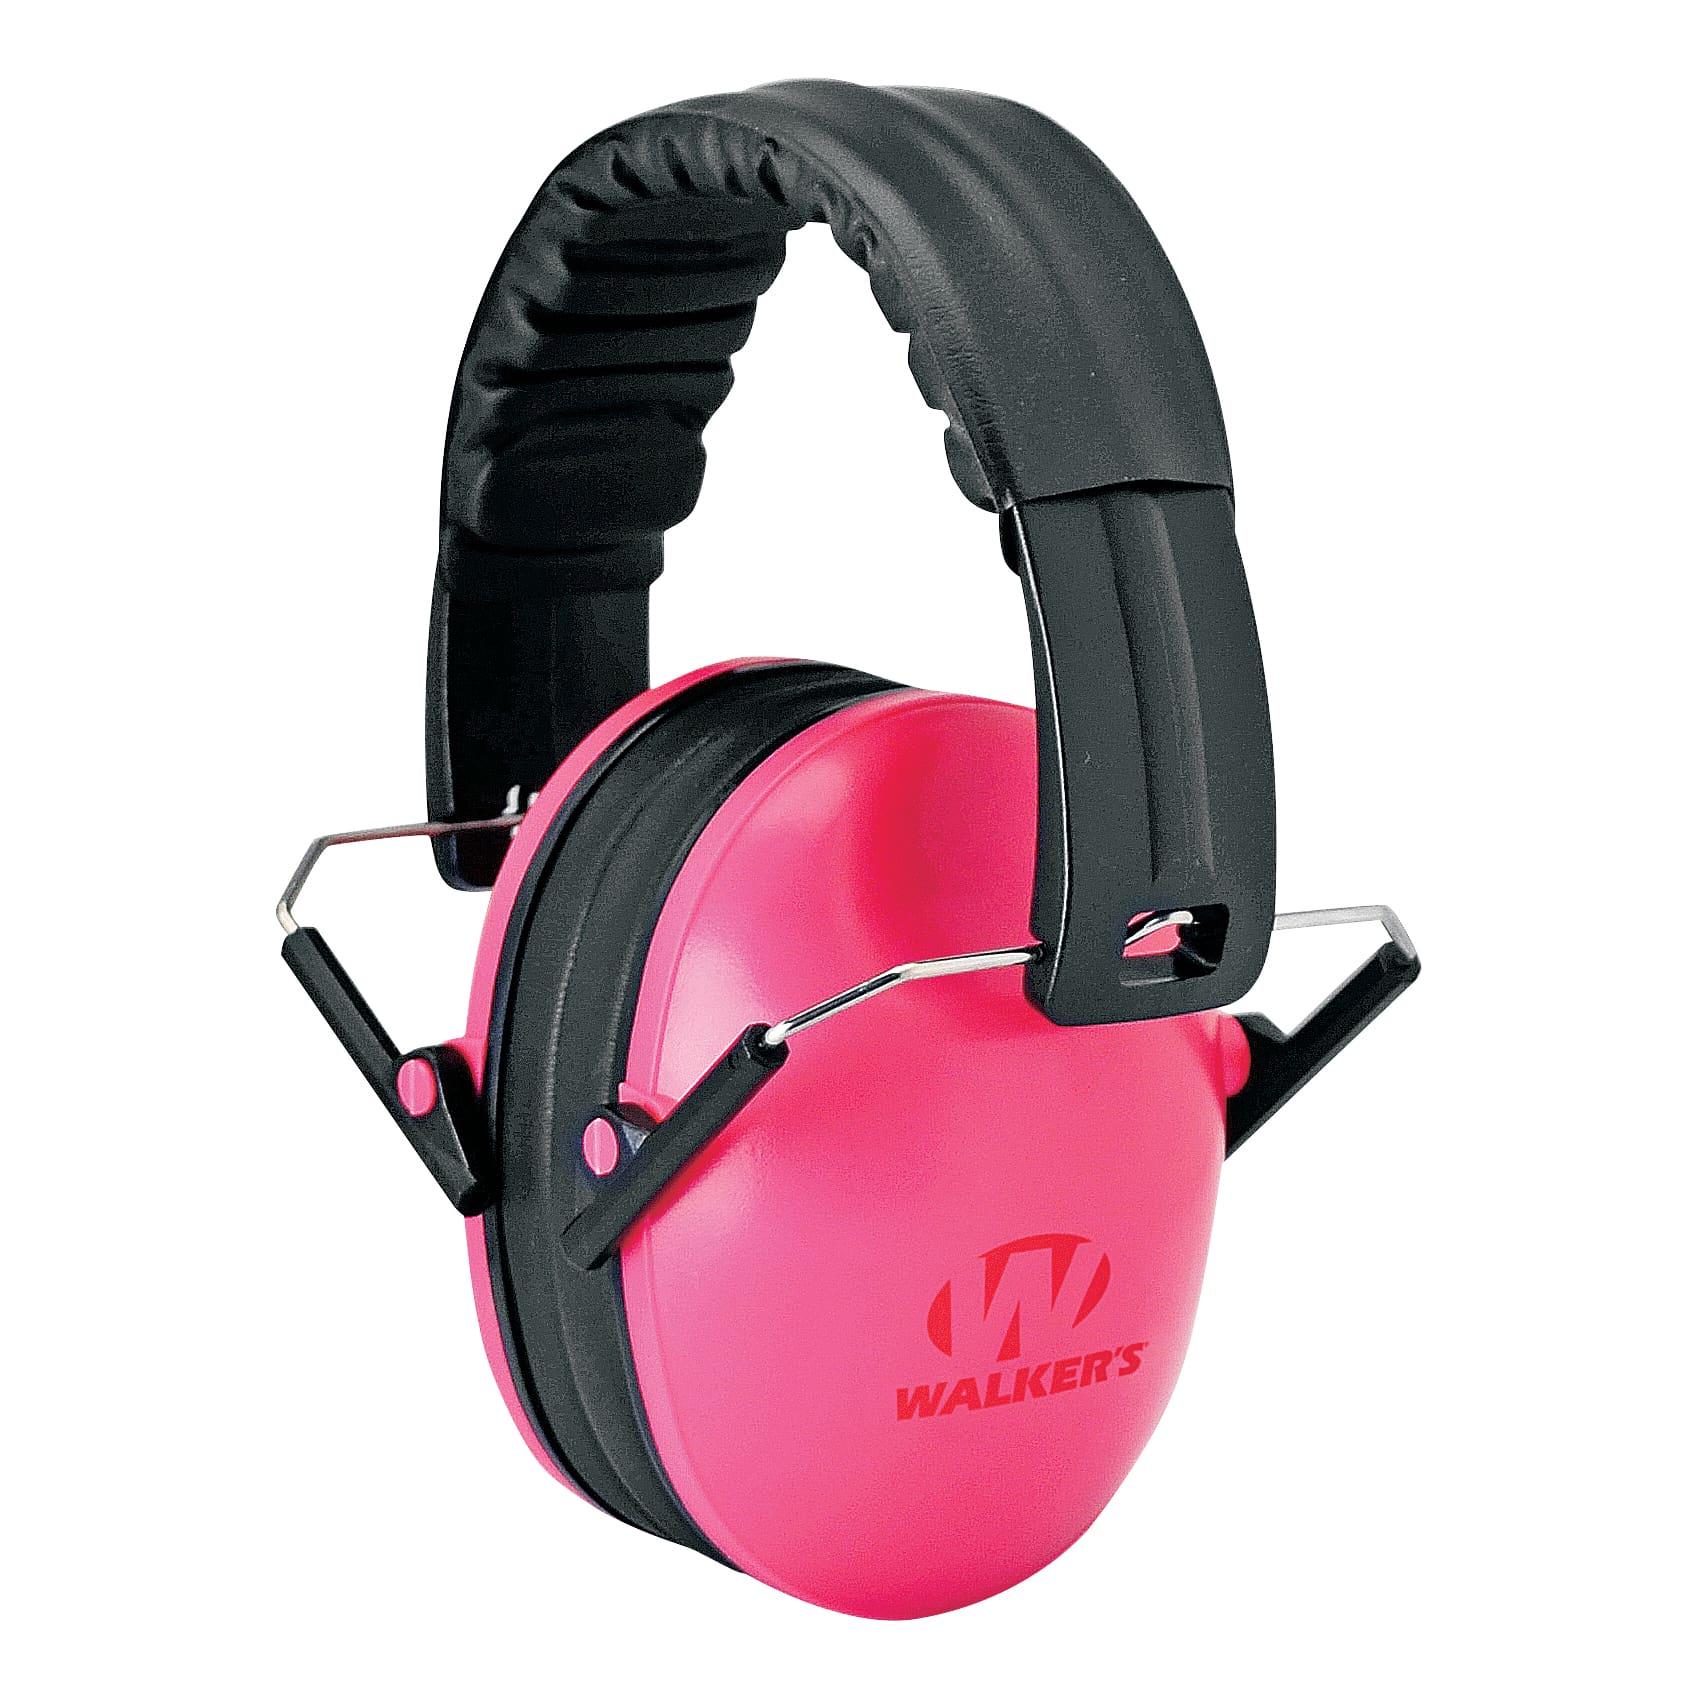 Walker's Children's Hearing-Protection Muffs - Pink